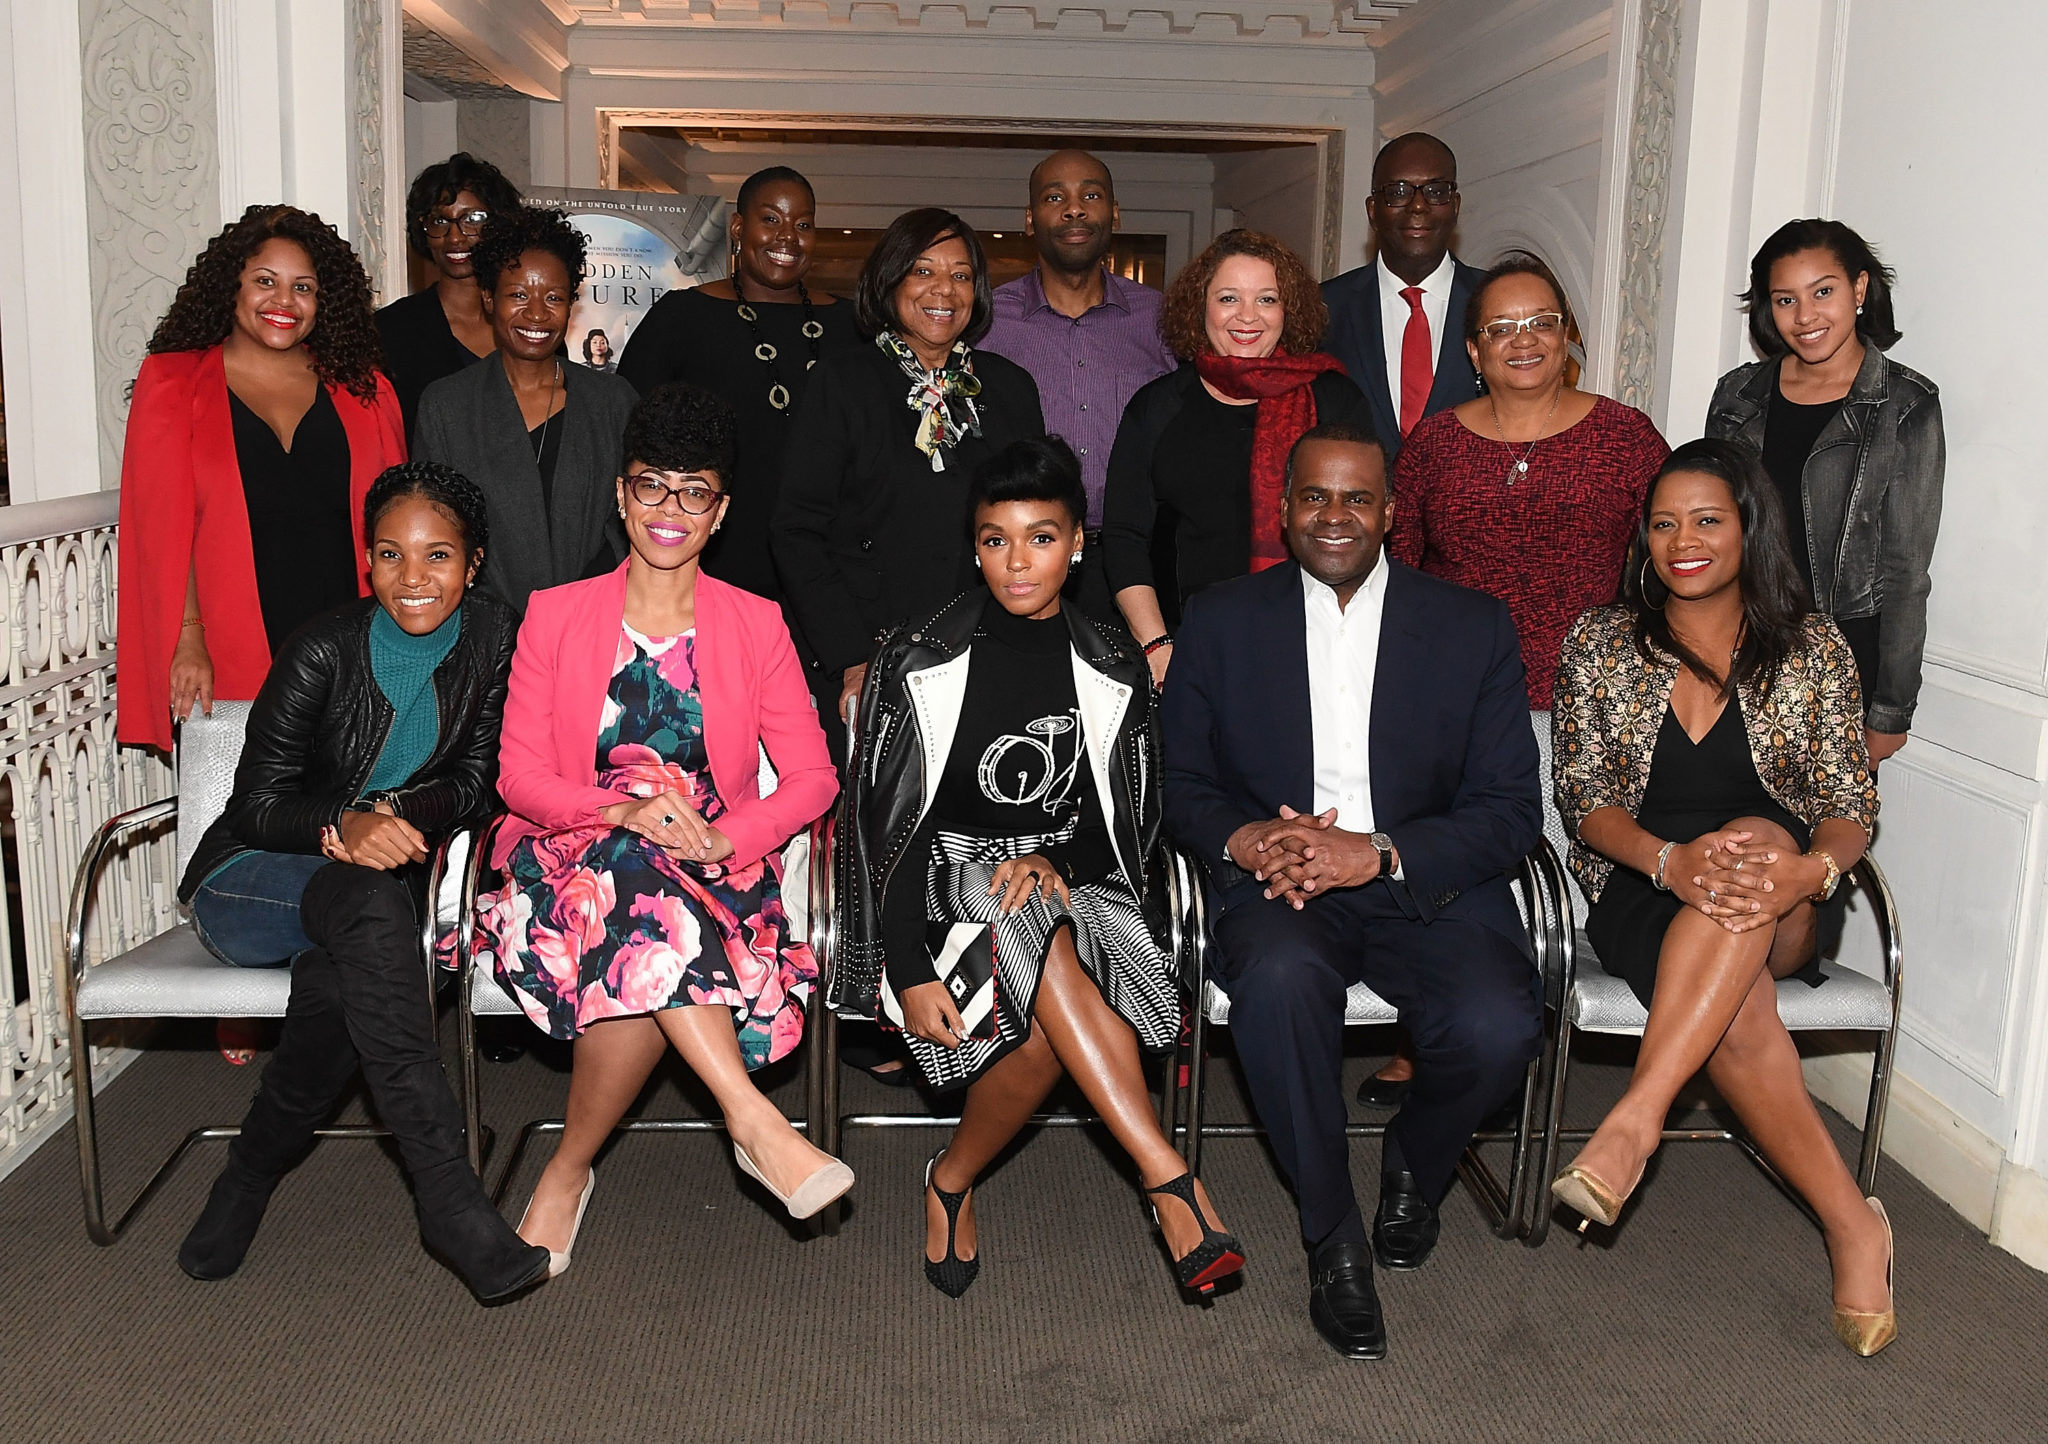 "HIDDEN FIGURES" Star Janelle Monae Hosts Dinner with STEM Leaders in Atlanta